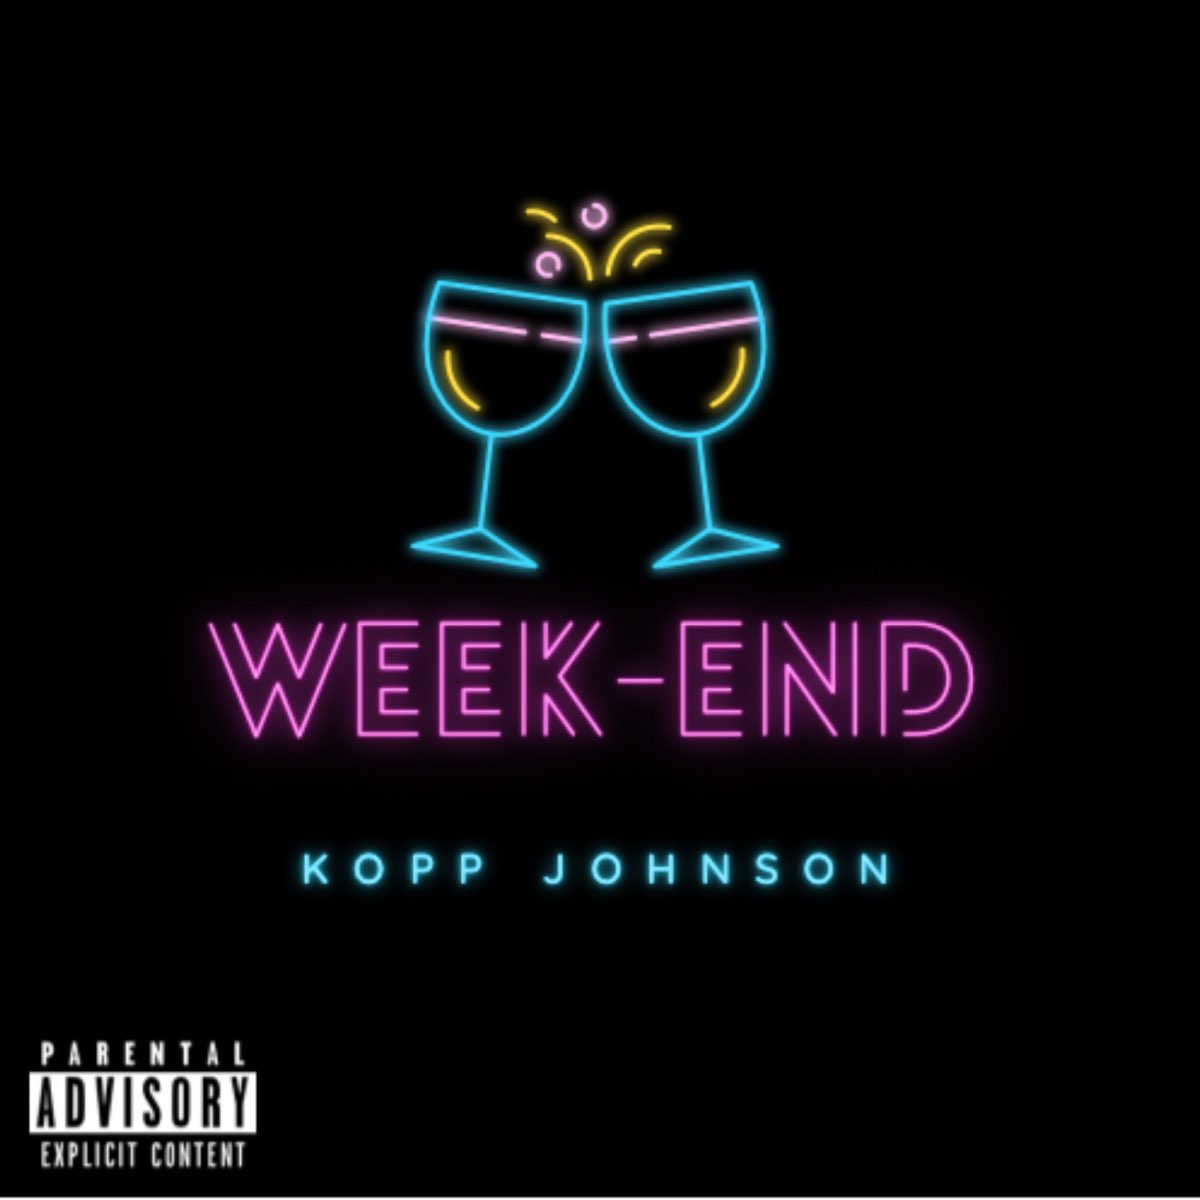 Week-End - Single by Kopp Johnson on Apple Music